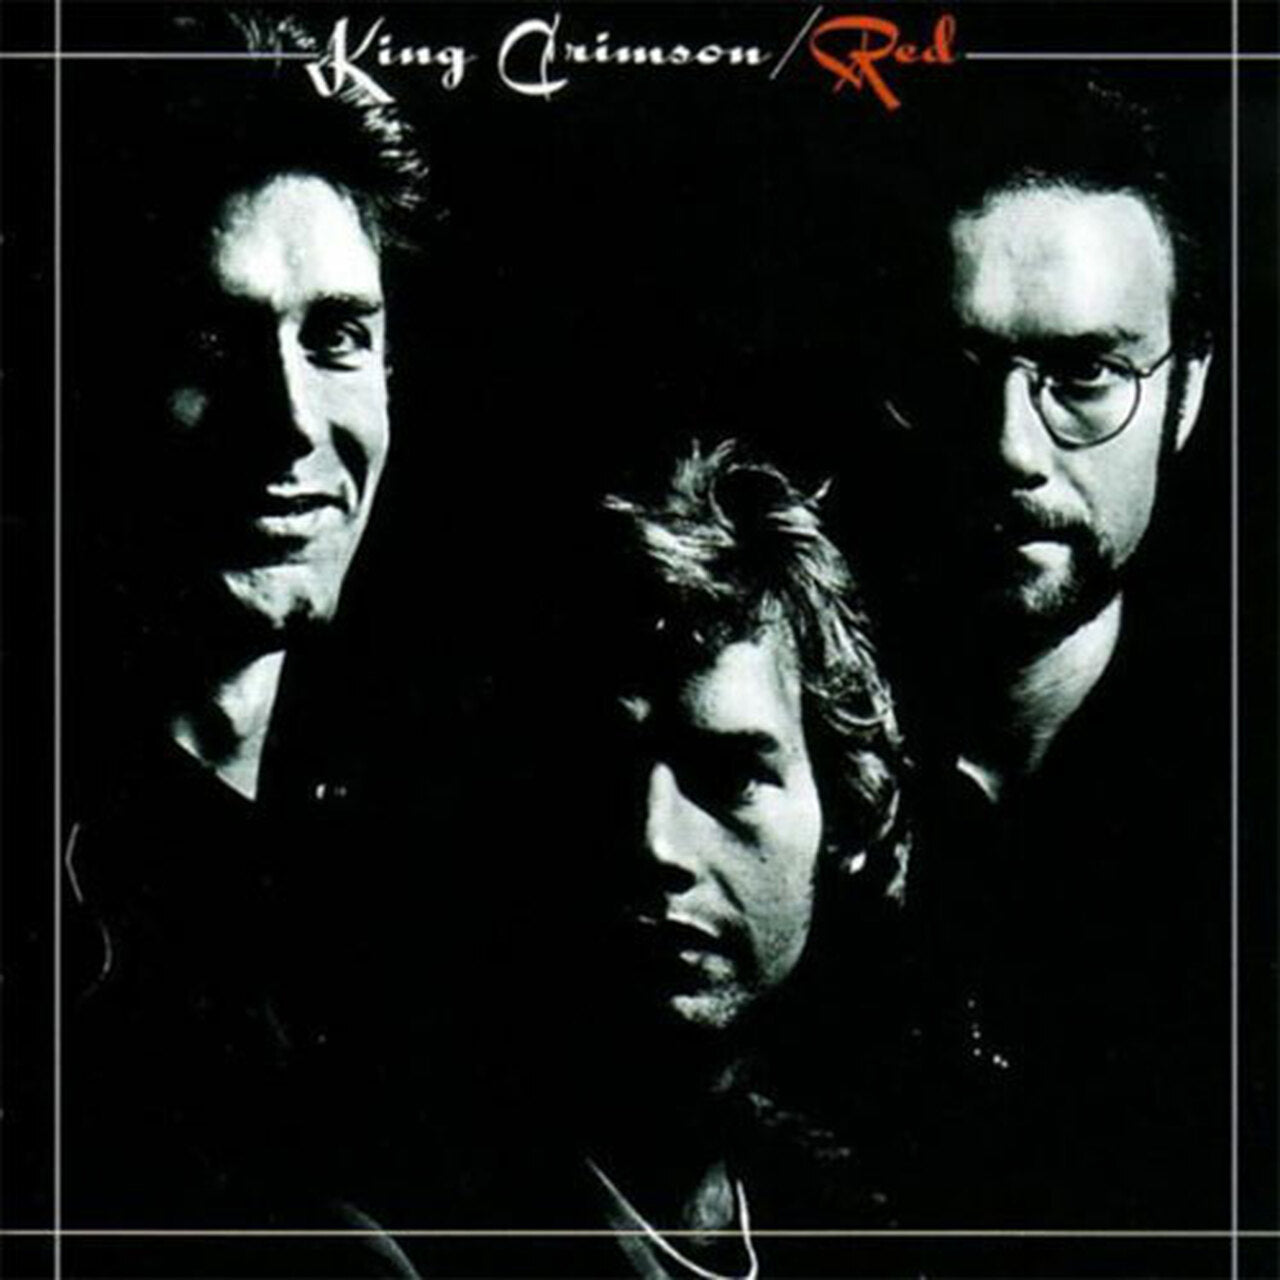 King Crimson Red 200g LP